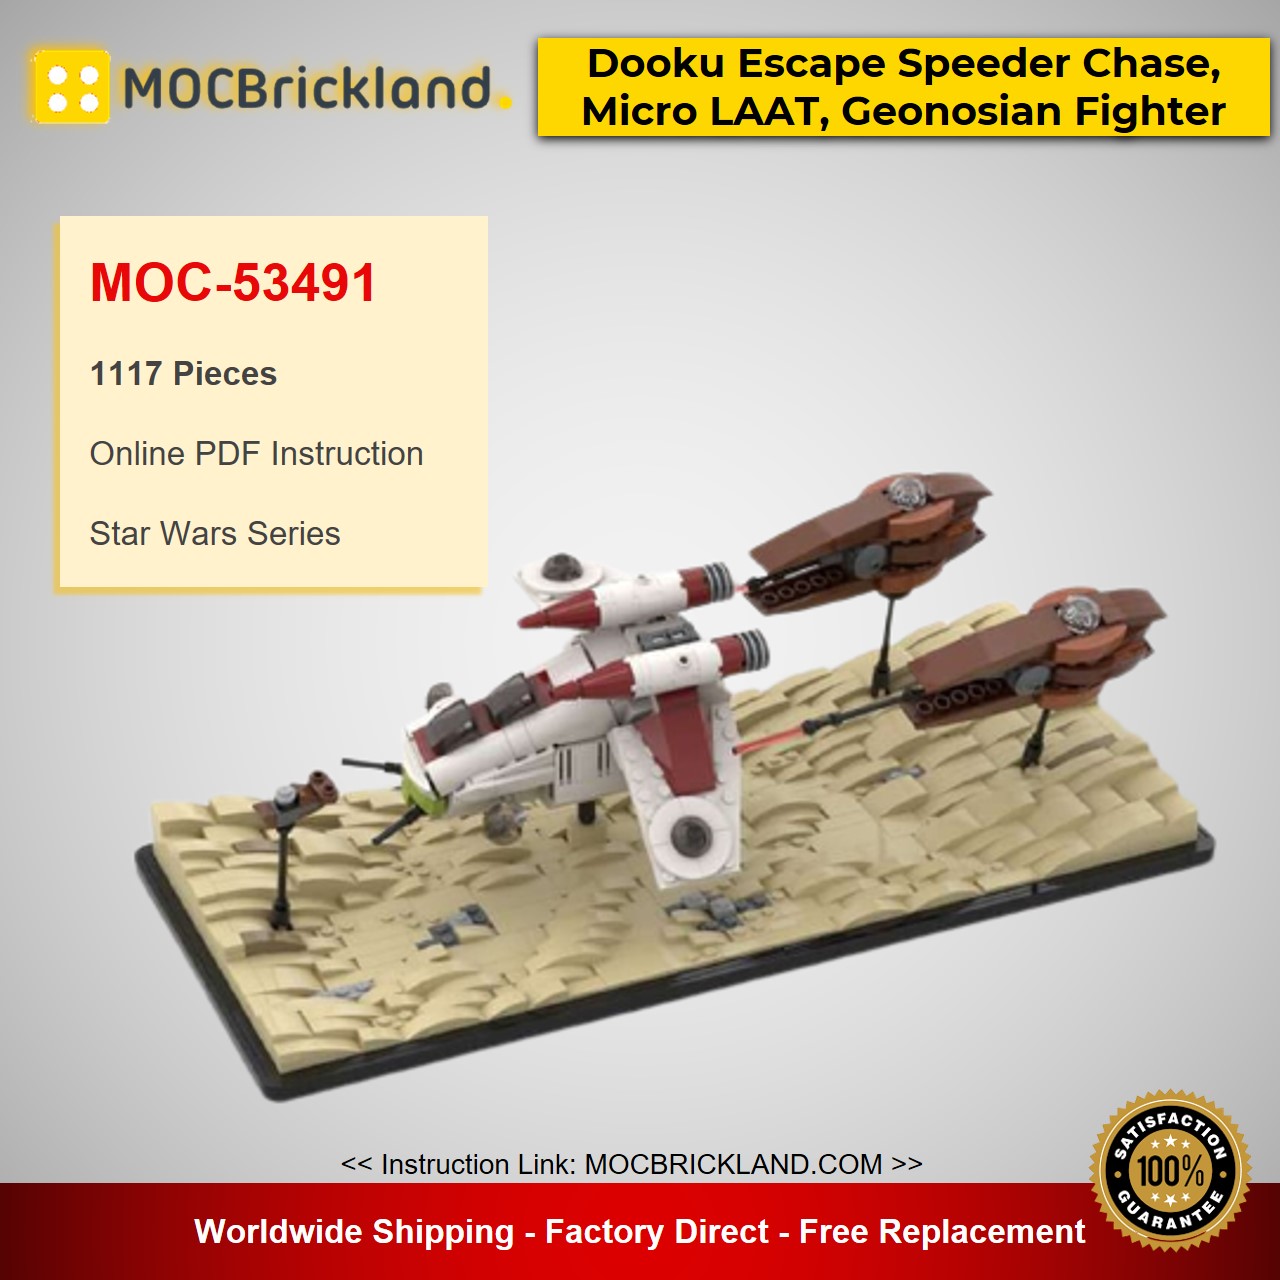 MOCBRICKLAND MOC-53491 Dooku Escape Speeder Chase, Micro LAAT, Geonosian Fighter Episode II